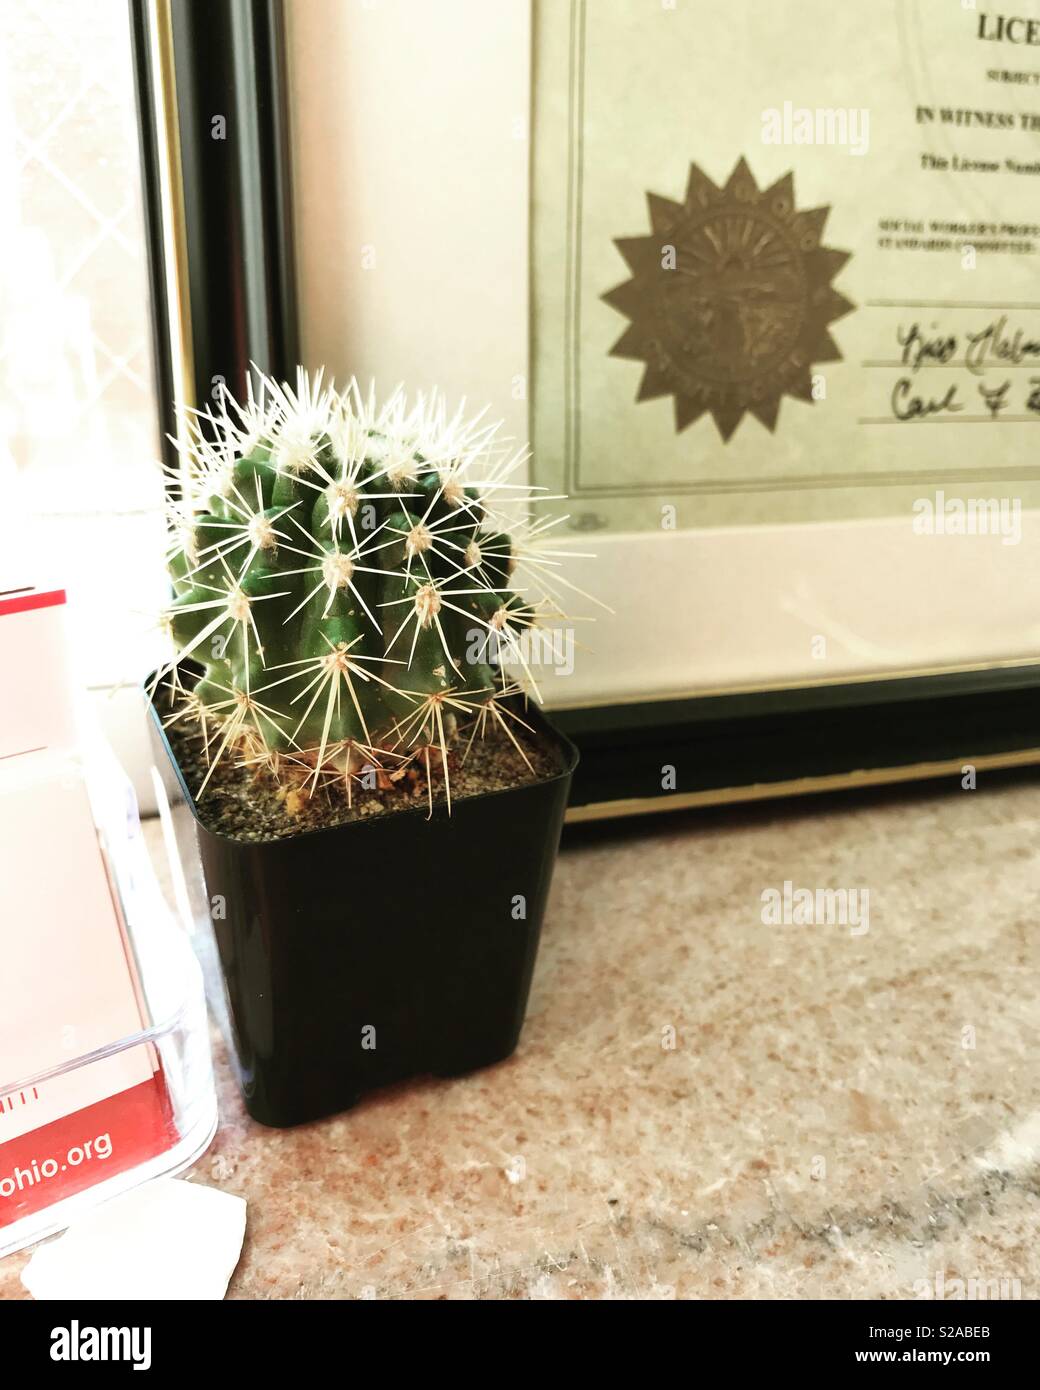 Thimble cactus in office windowsill Stock Photo